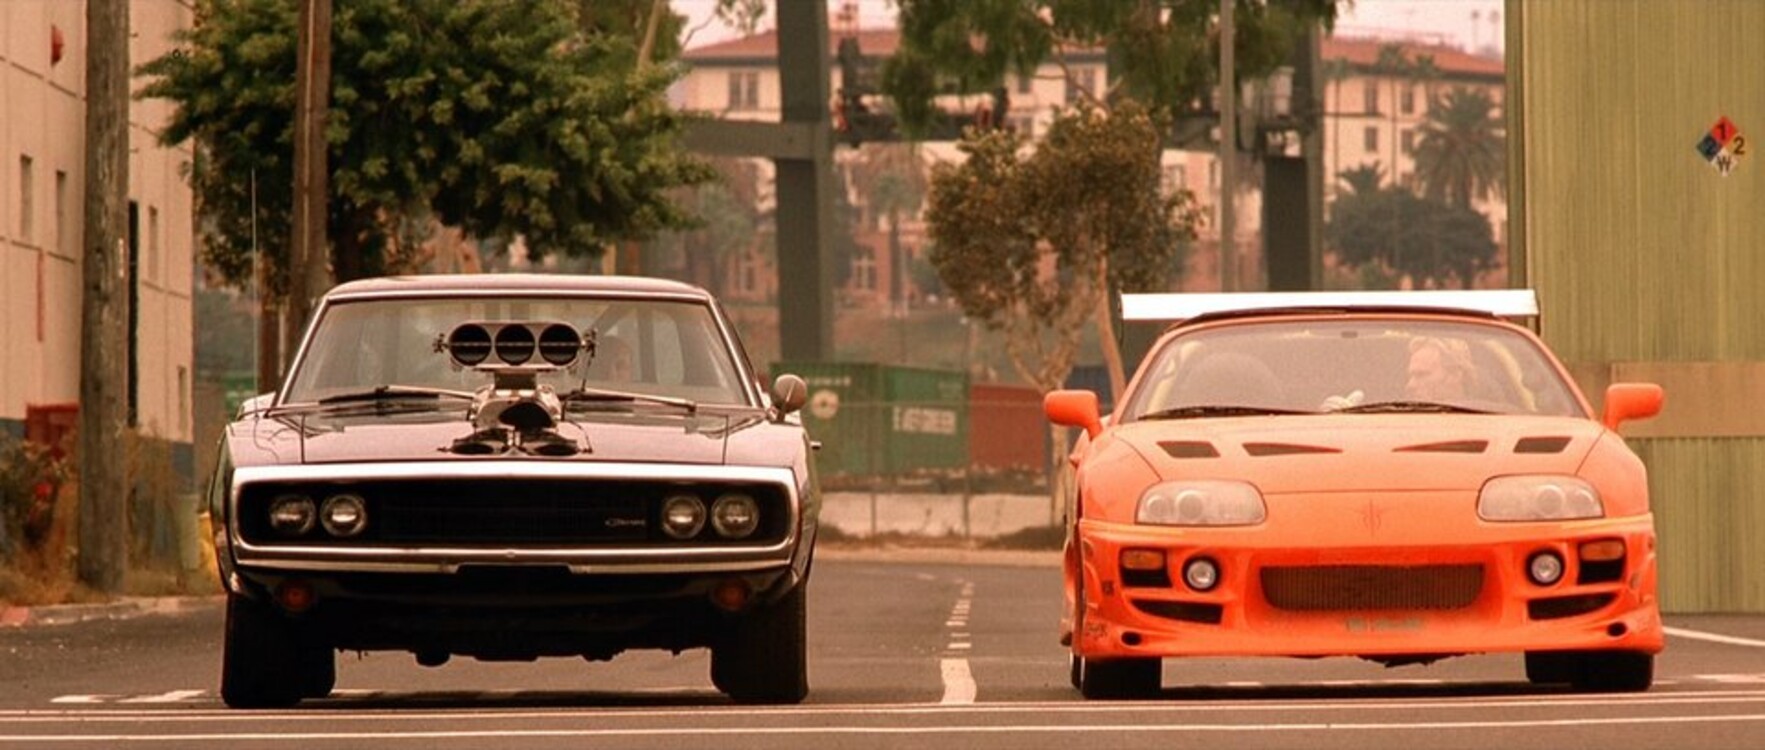 1970 Dodge Charger и 1994 Toyota Supra из фильма «Форсаж», 2001